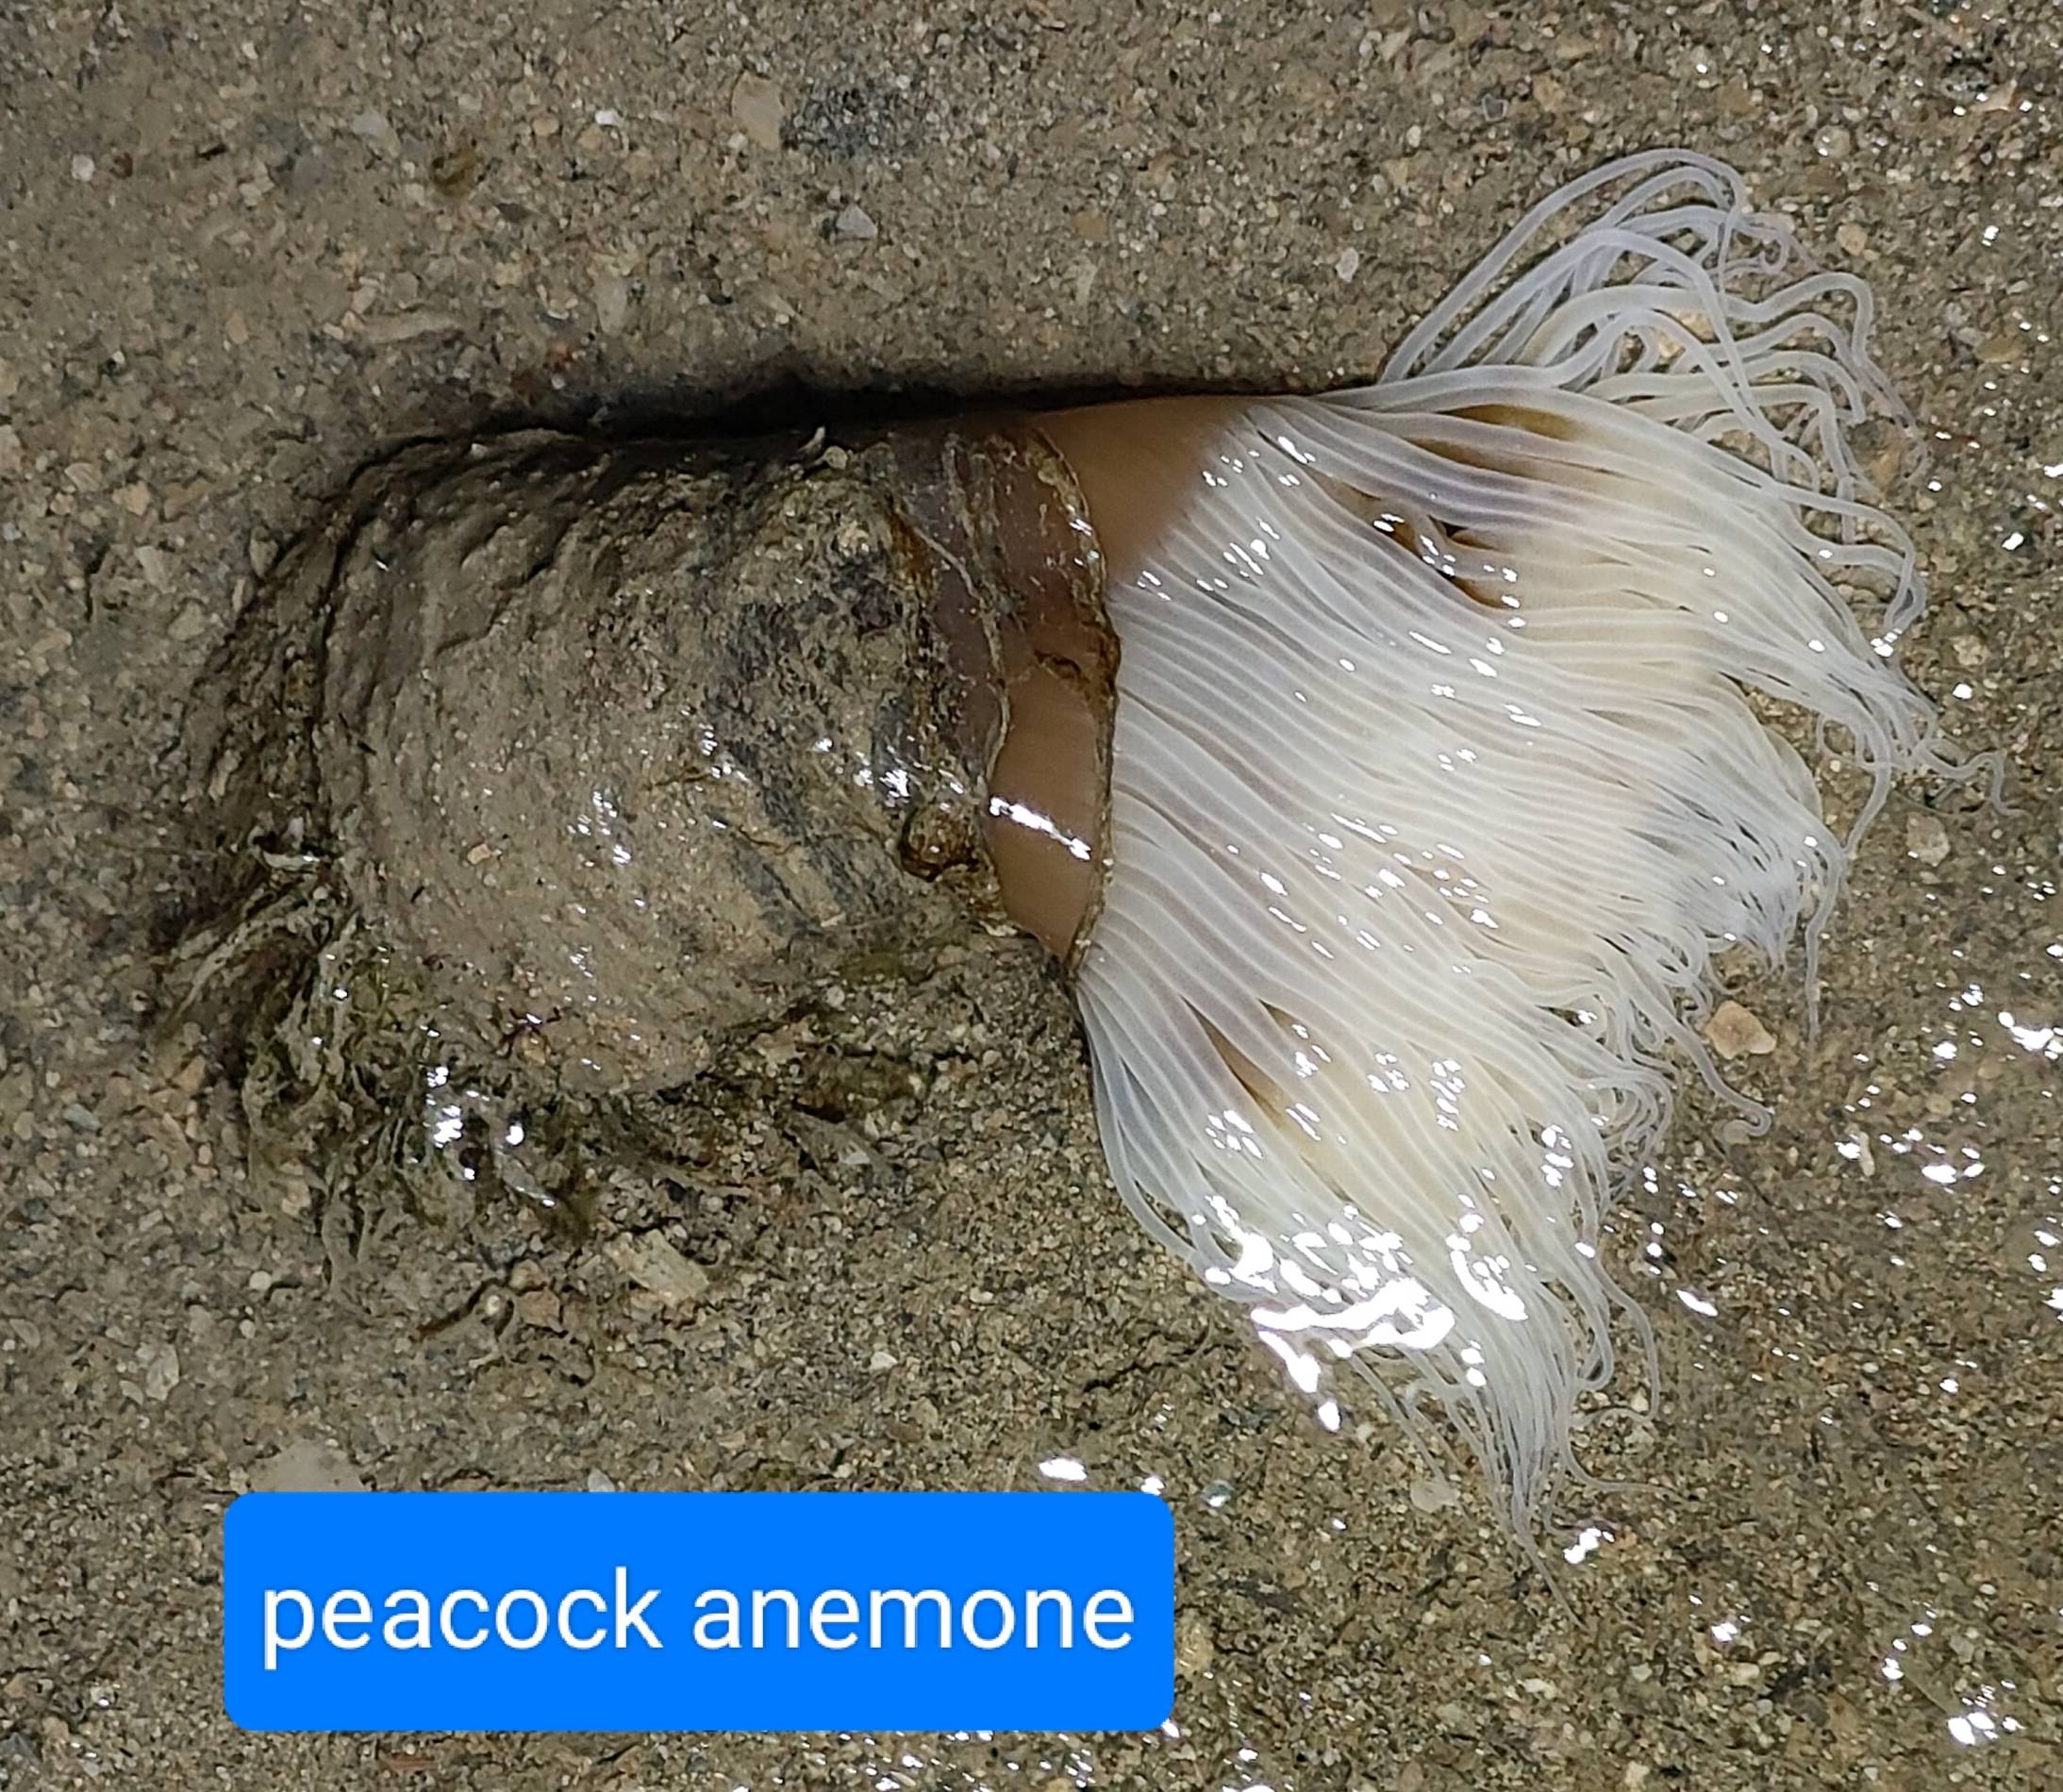 Peacock anemone